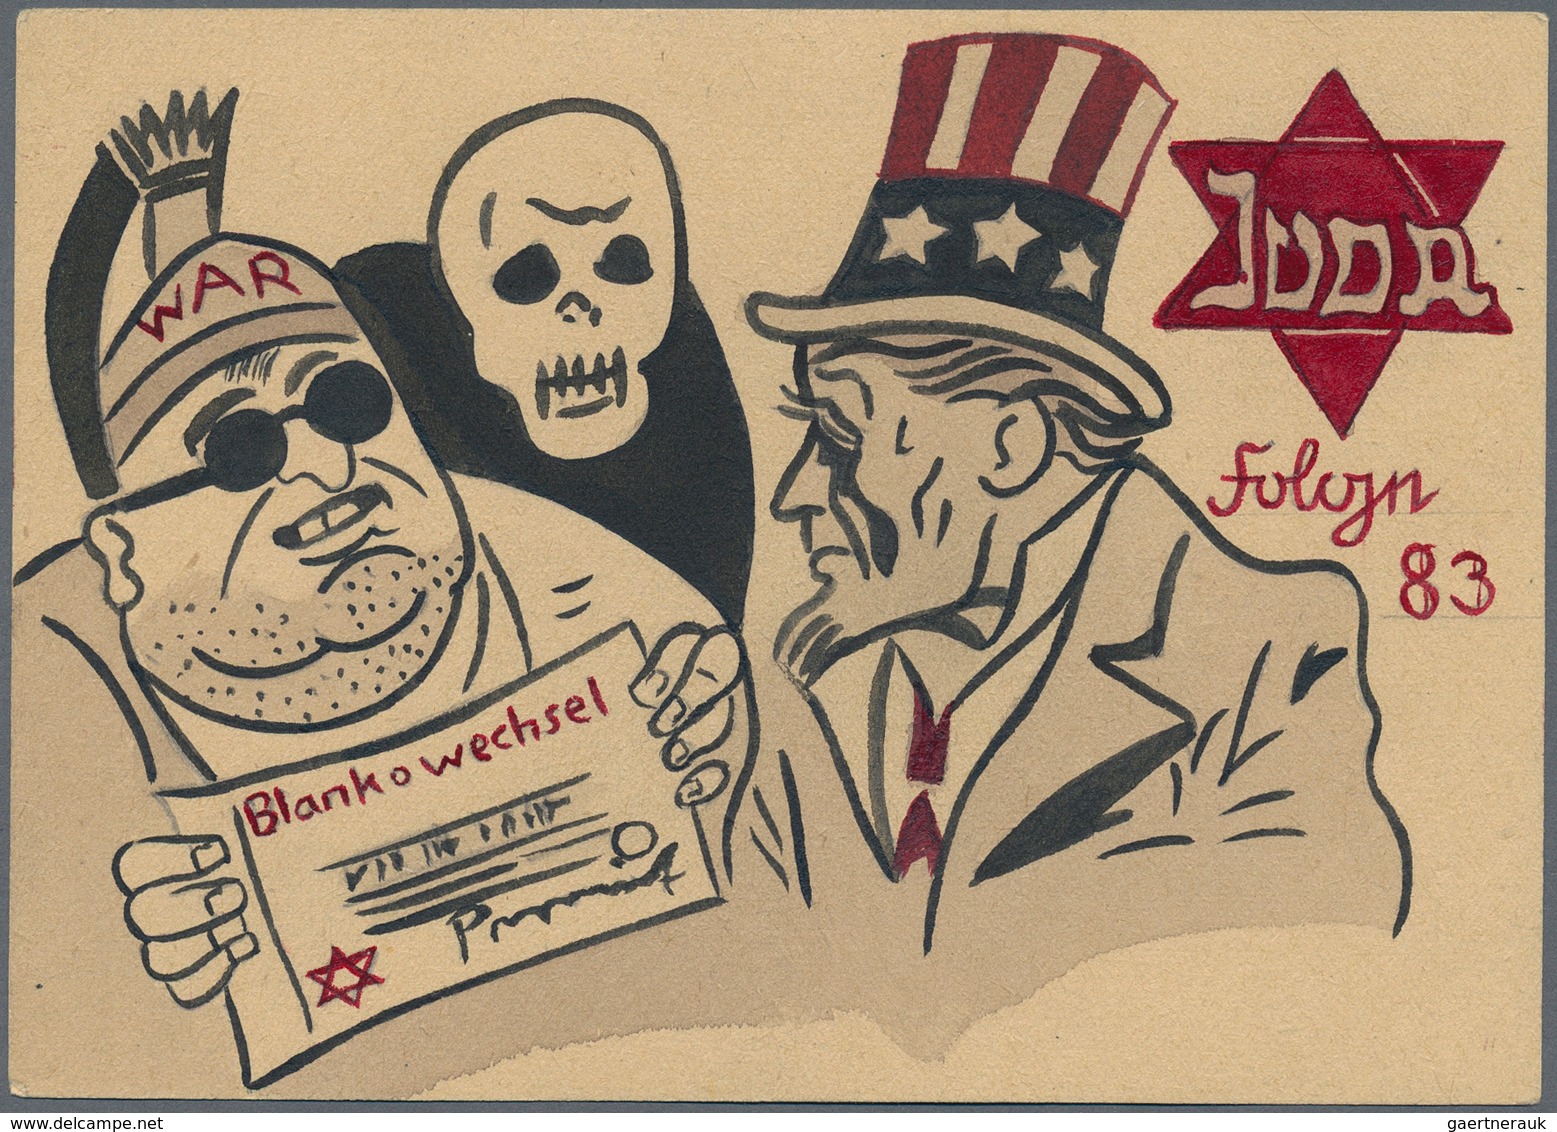 21152 Ansichtskarten: Propaganda: Antisemitismus - "JUDA - Krieg Mit Folgen", "Folge 83", Zutiefst Antijüd - Political Parties & Elections